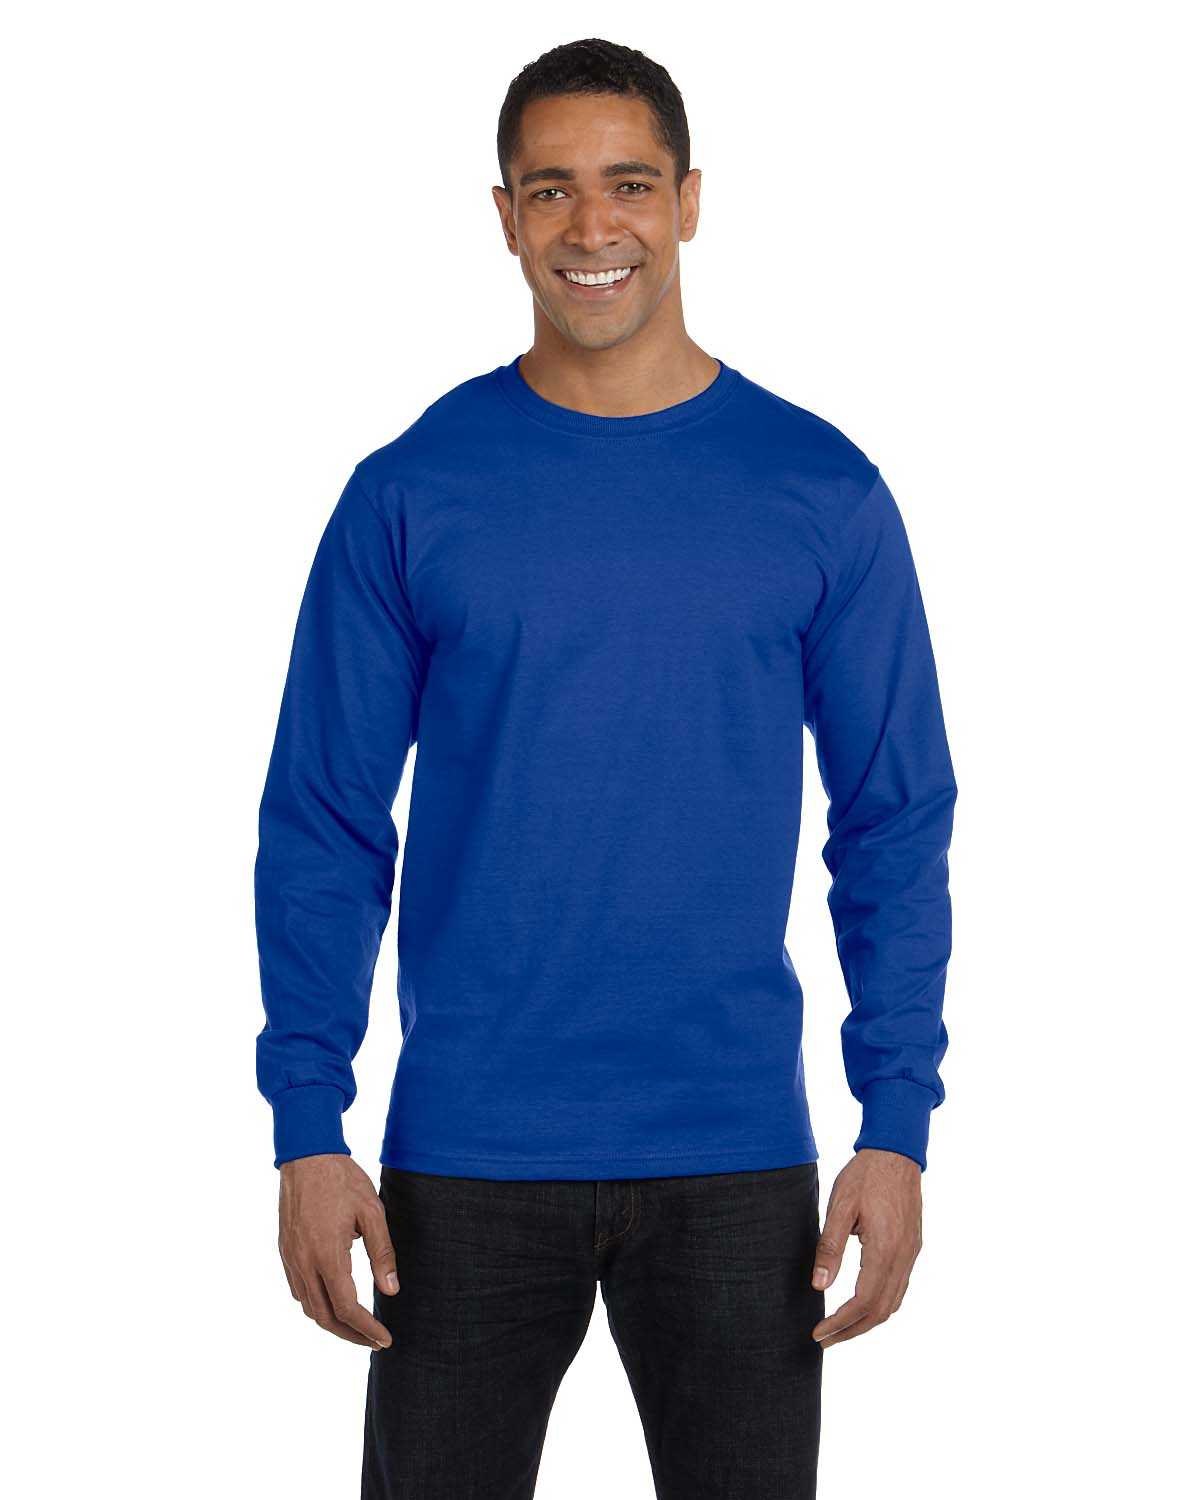 Hanes 5286 Men's 5.2 oz. ComfortSoft Cotton Long-Sleeve T-Shirt ...